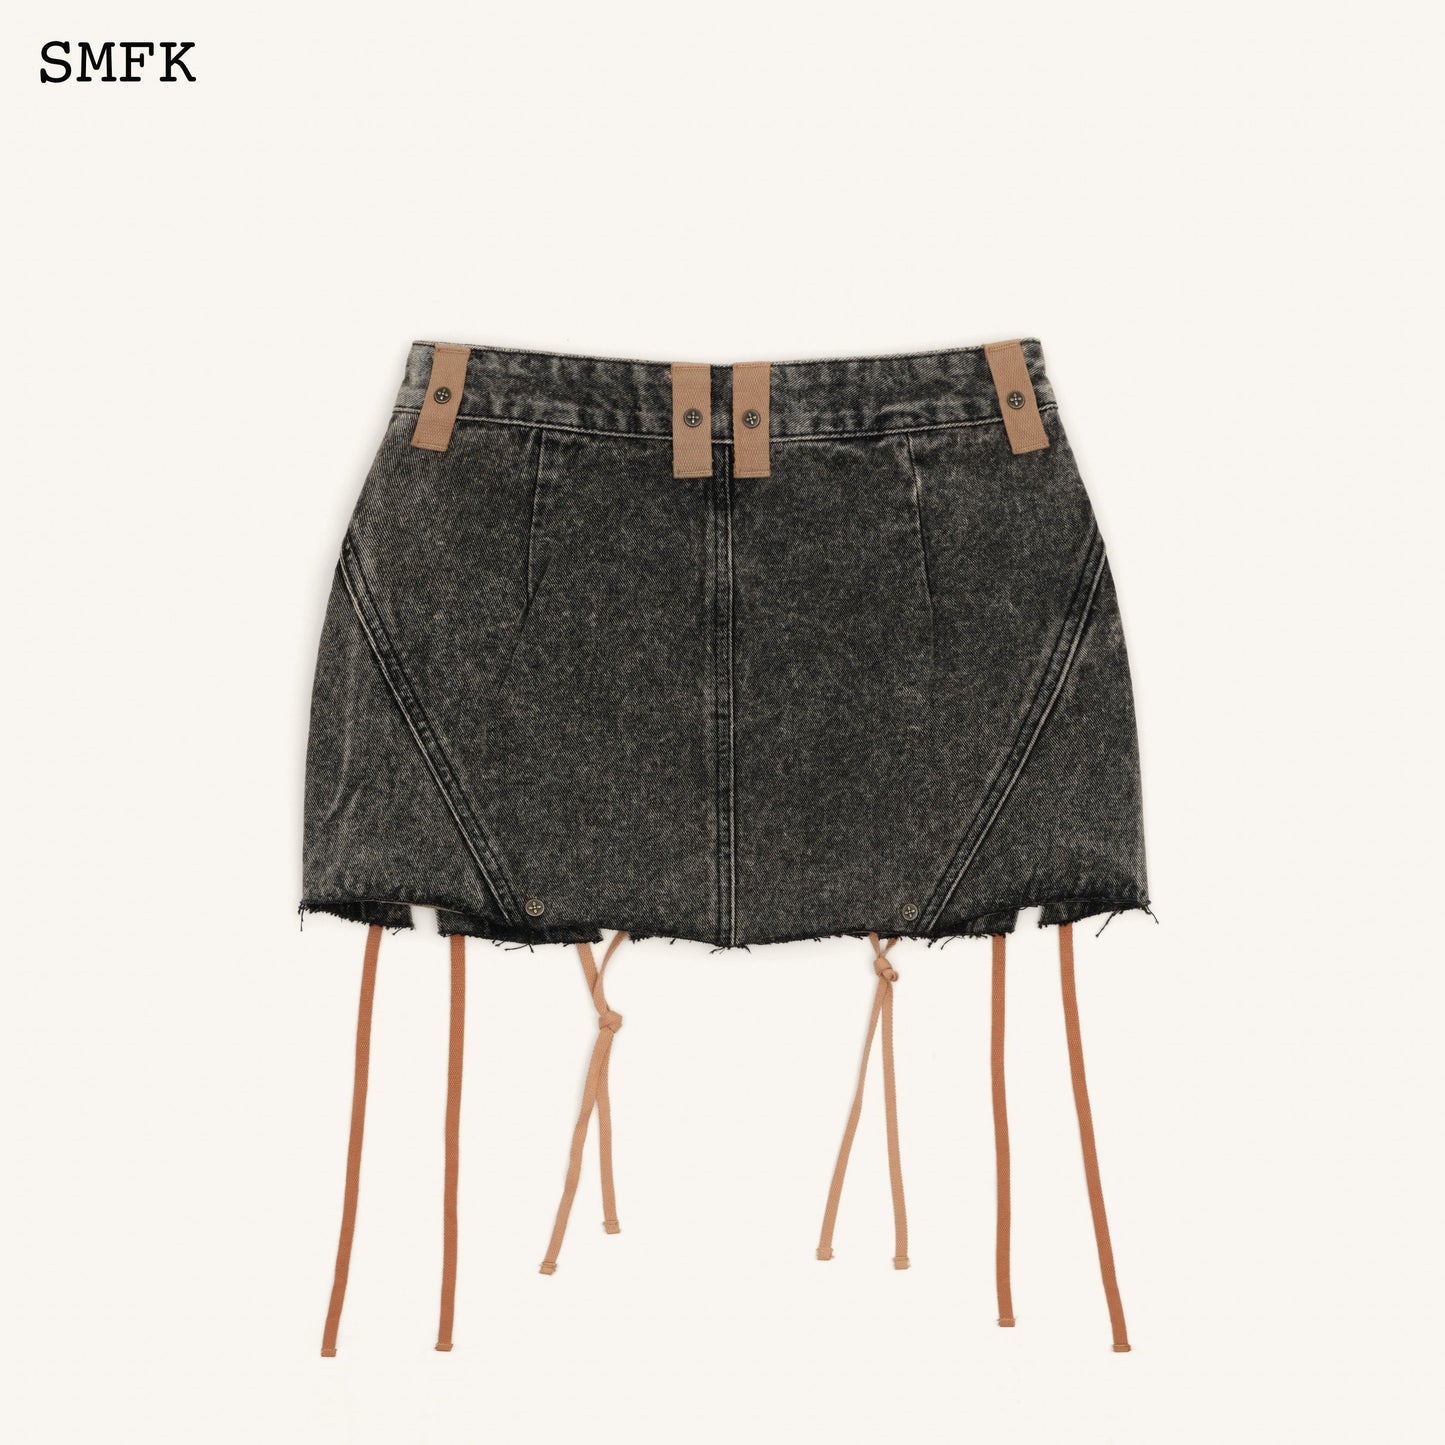 SMFK Ancient Myth Cobra Braid Workwear Mini Skirt